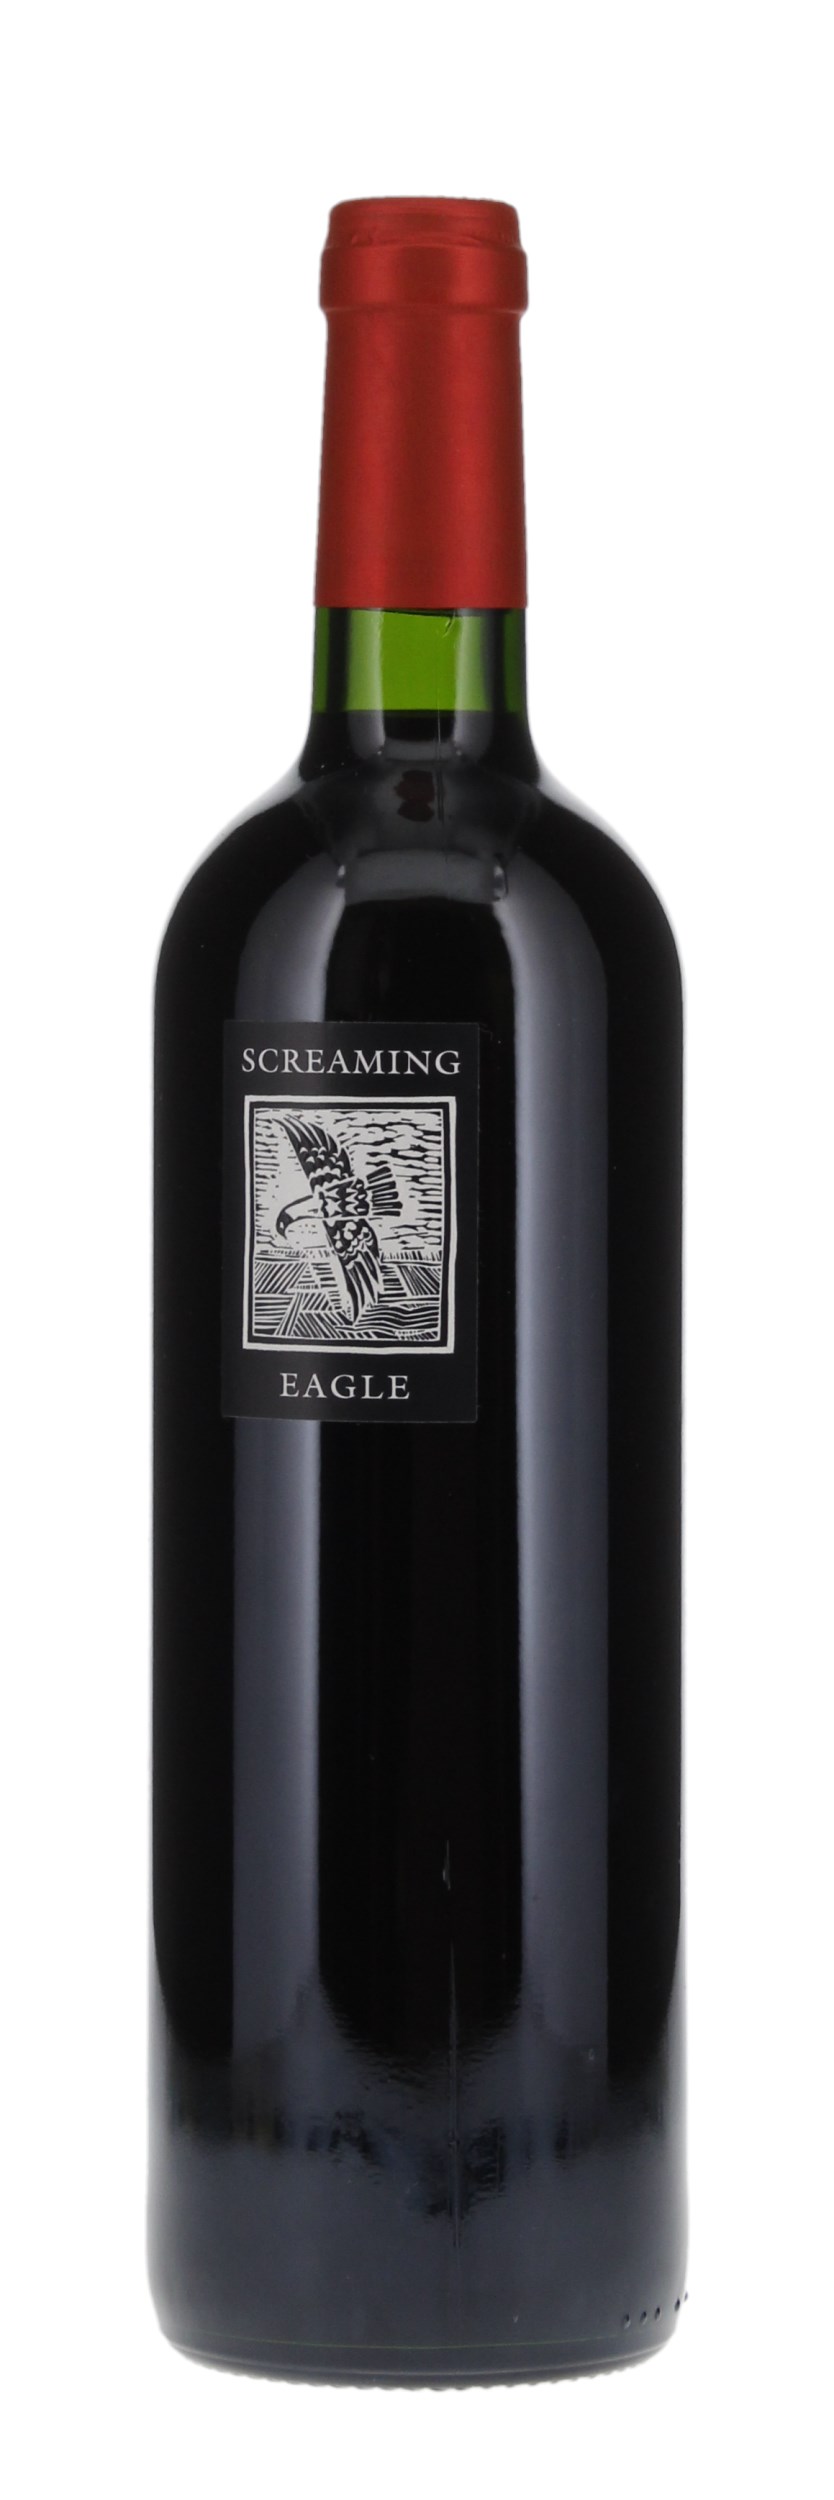 2009 Screaming Eagle Cabernet Sauvignon, 750ml